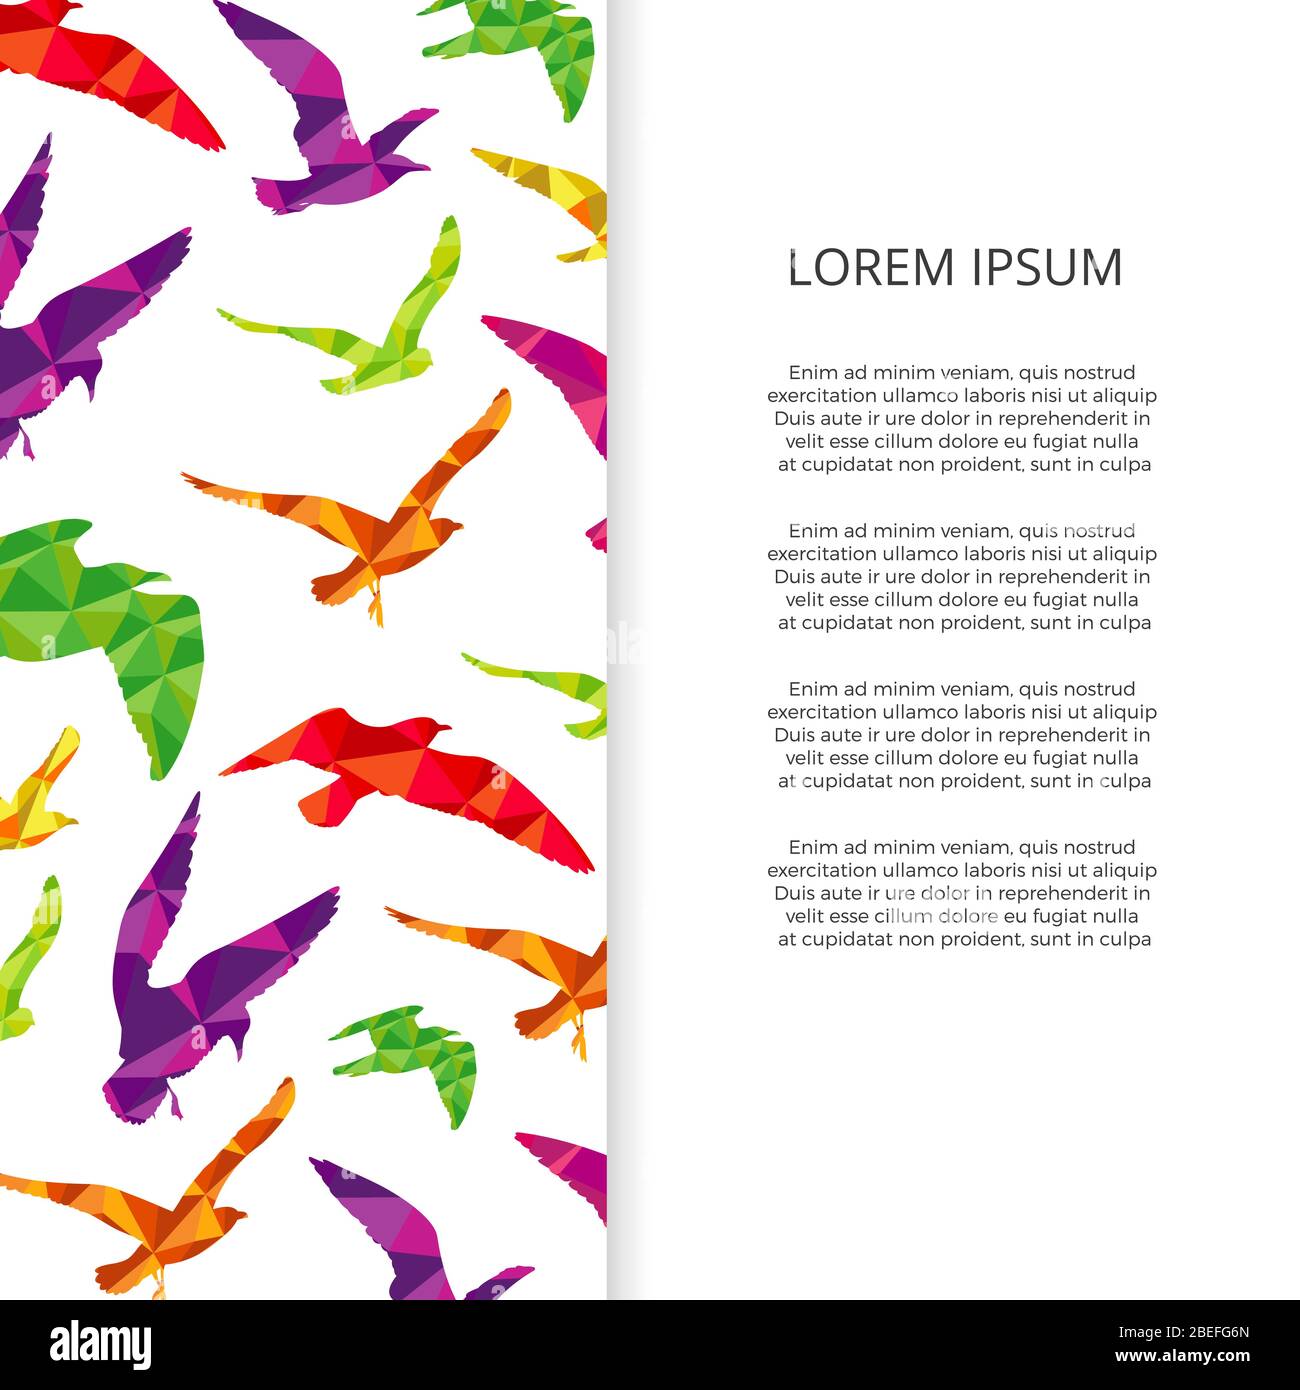 Bunte Tiervögel Silhouetten Banner und Poster Design. Vektorgrafik Stock Vektor